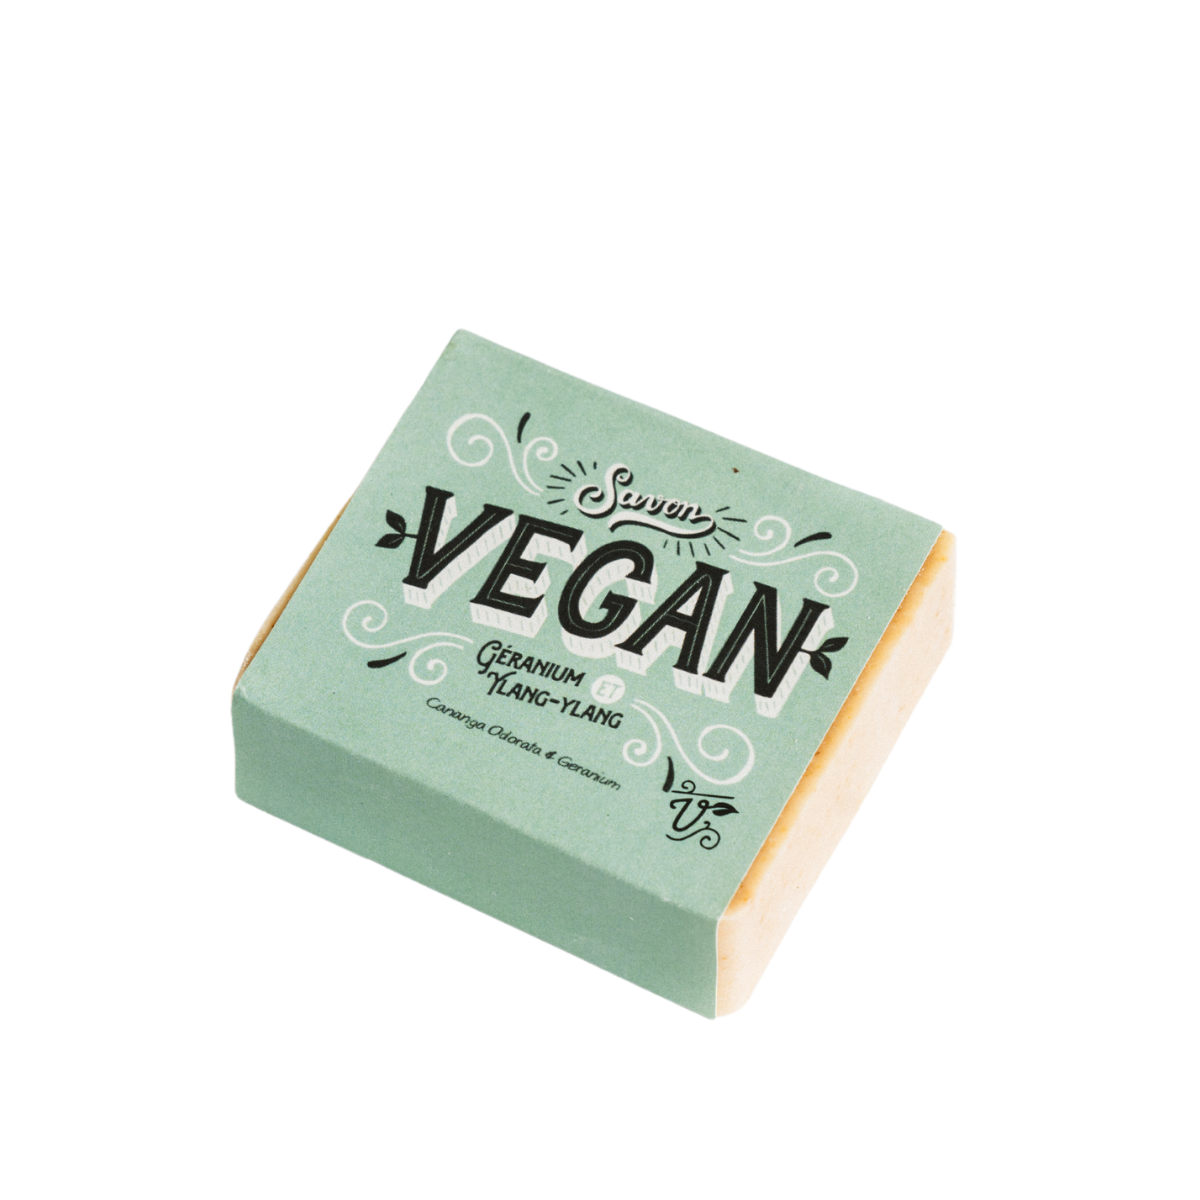 Savon Vegan - Géranium et Ylang-Ylang